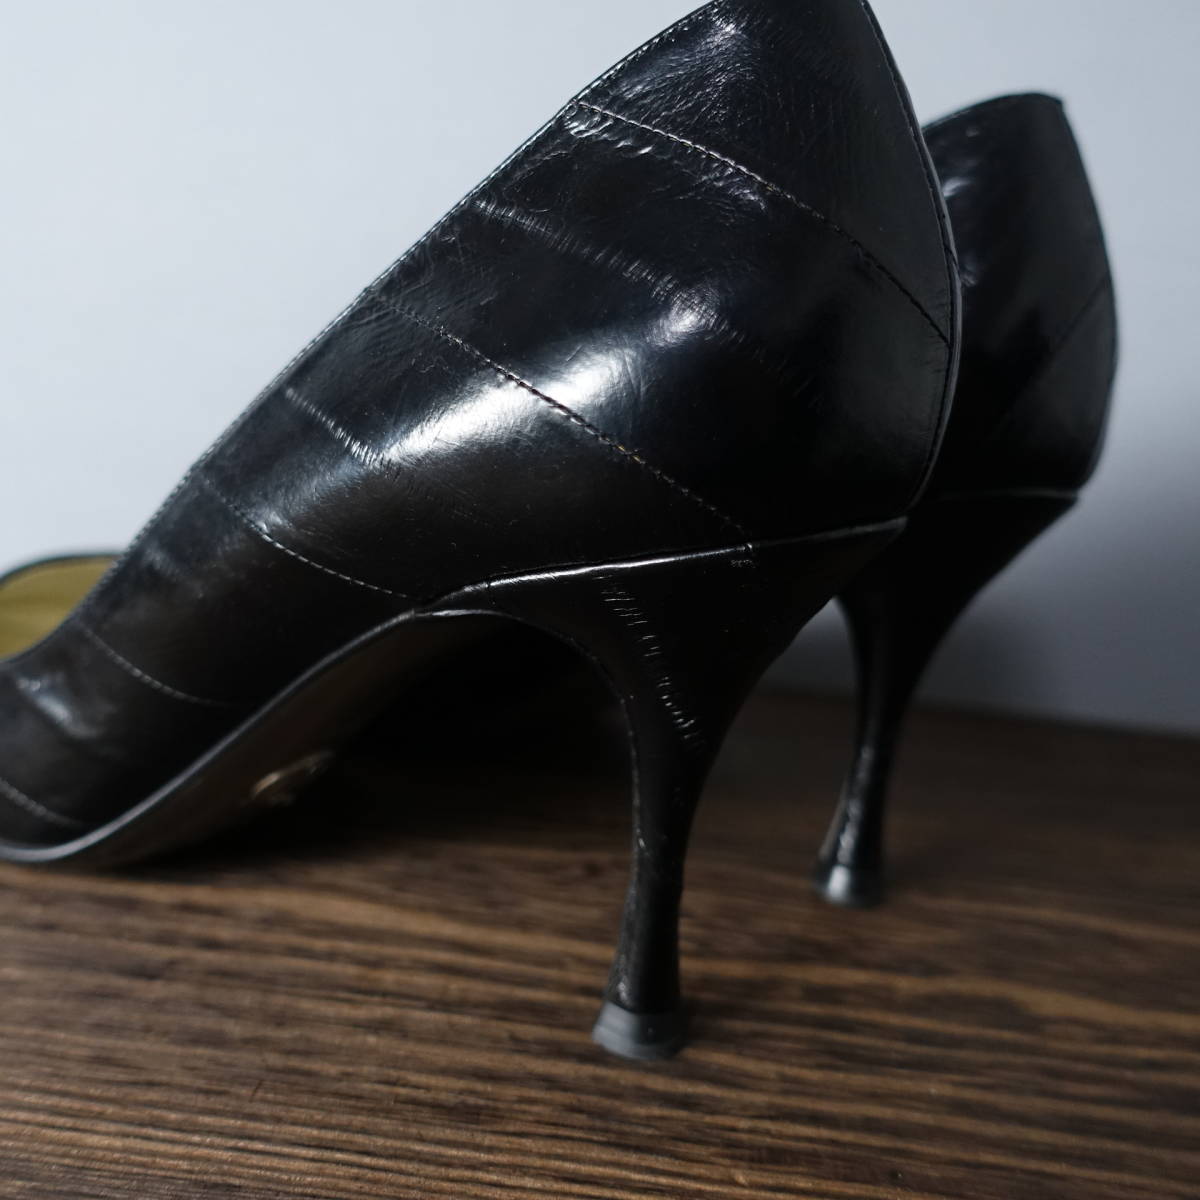 DOLCE&GABBANA/ Dolce & Gabbana /38.5/ Italy made / high heel pumps / black / black / lady's / shoes / shoes / Dolce&Gabbana 